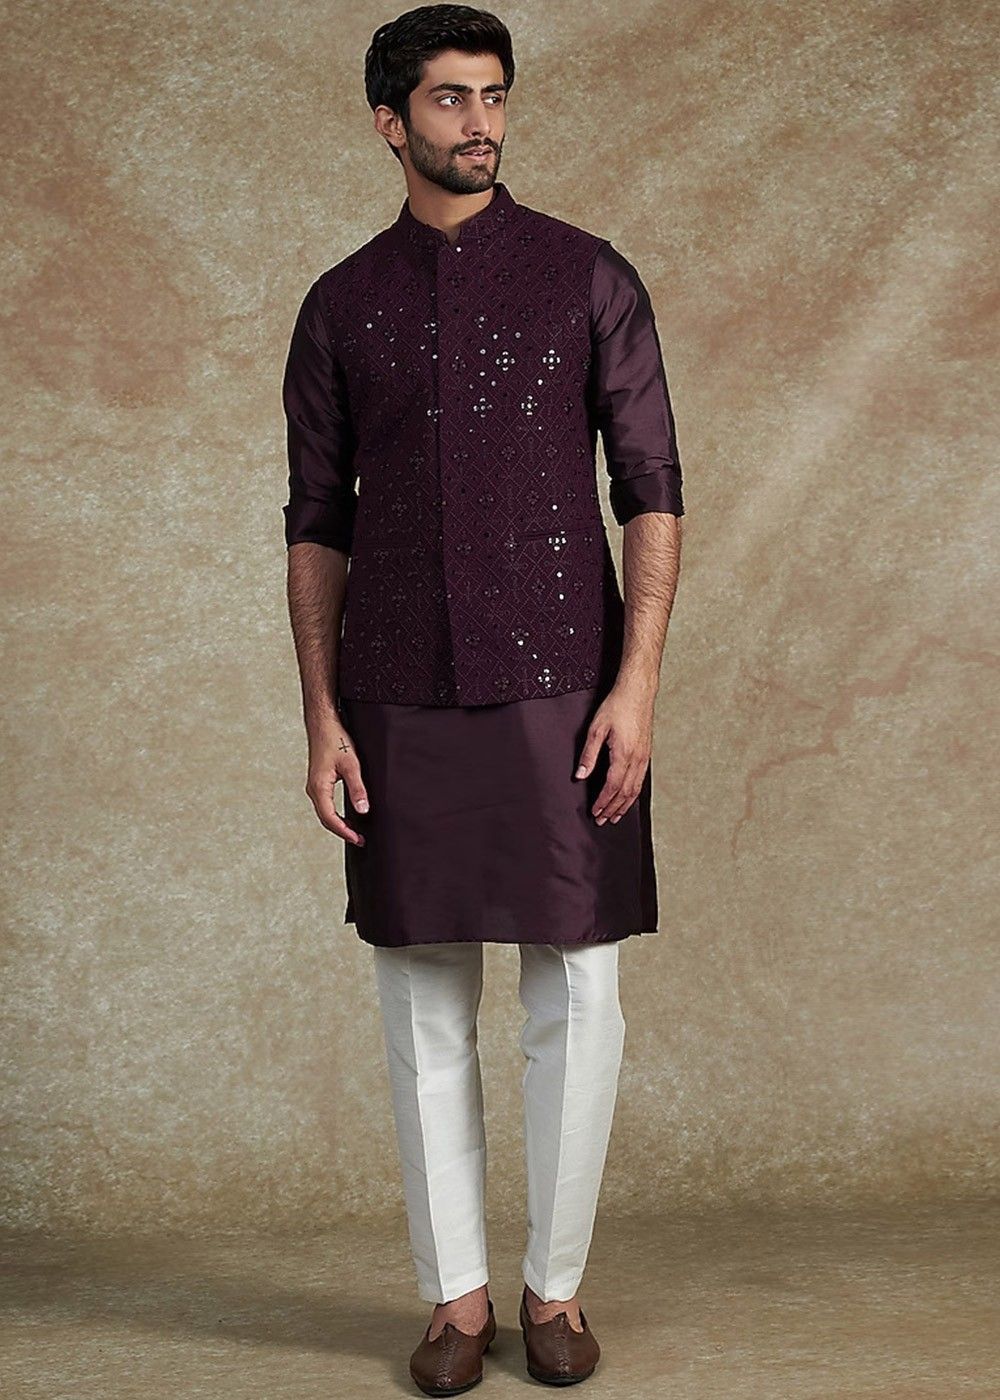 Men's Formal Casual Nehru Jacket - Wine - COZOQ - The Fashion Cruze